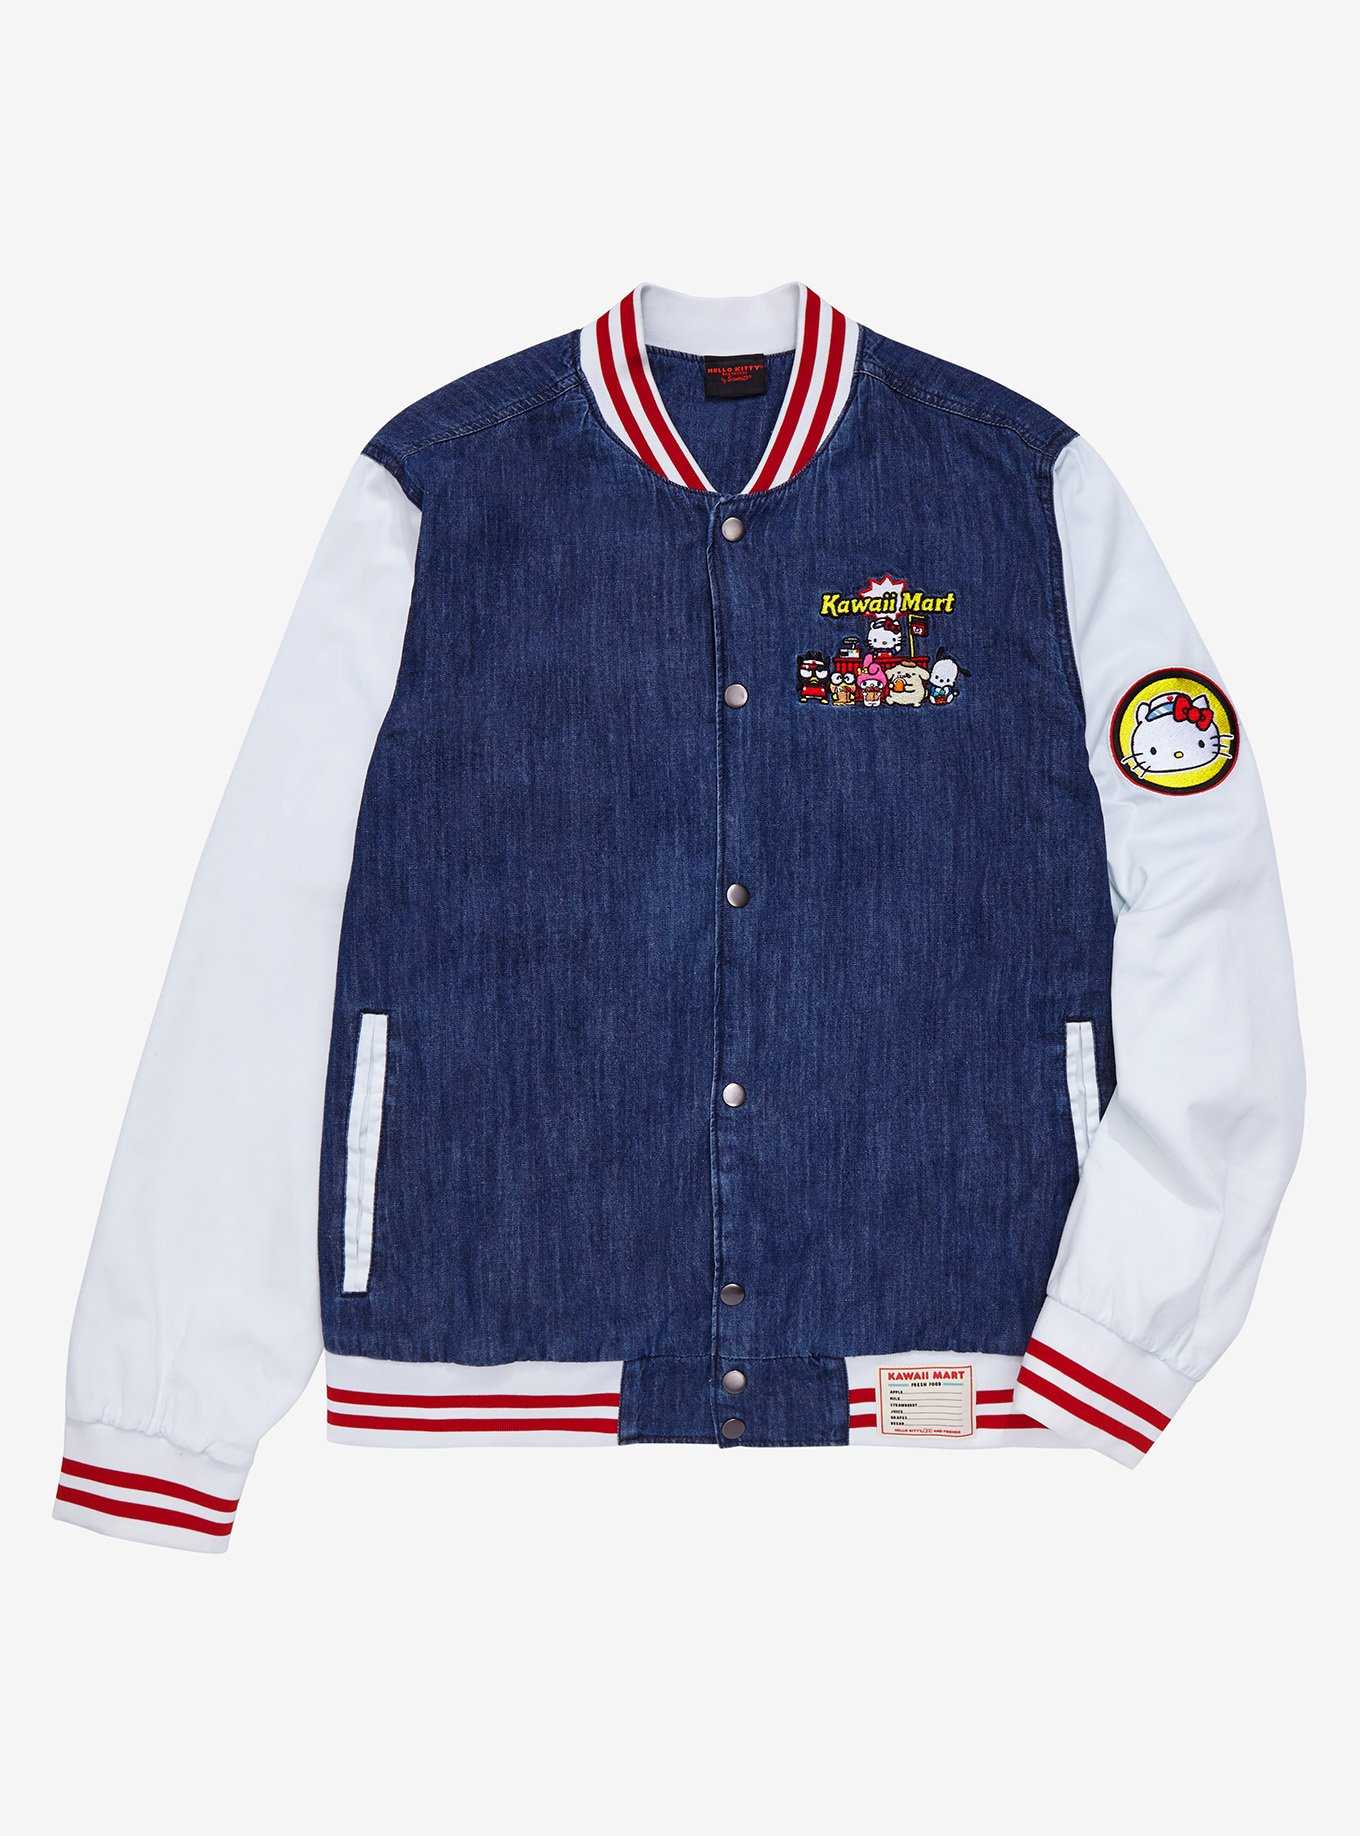 Sanrio Kawaii Mart Denim Varsity Jacket - BoxLunch Exclusive , , hi-res